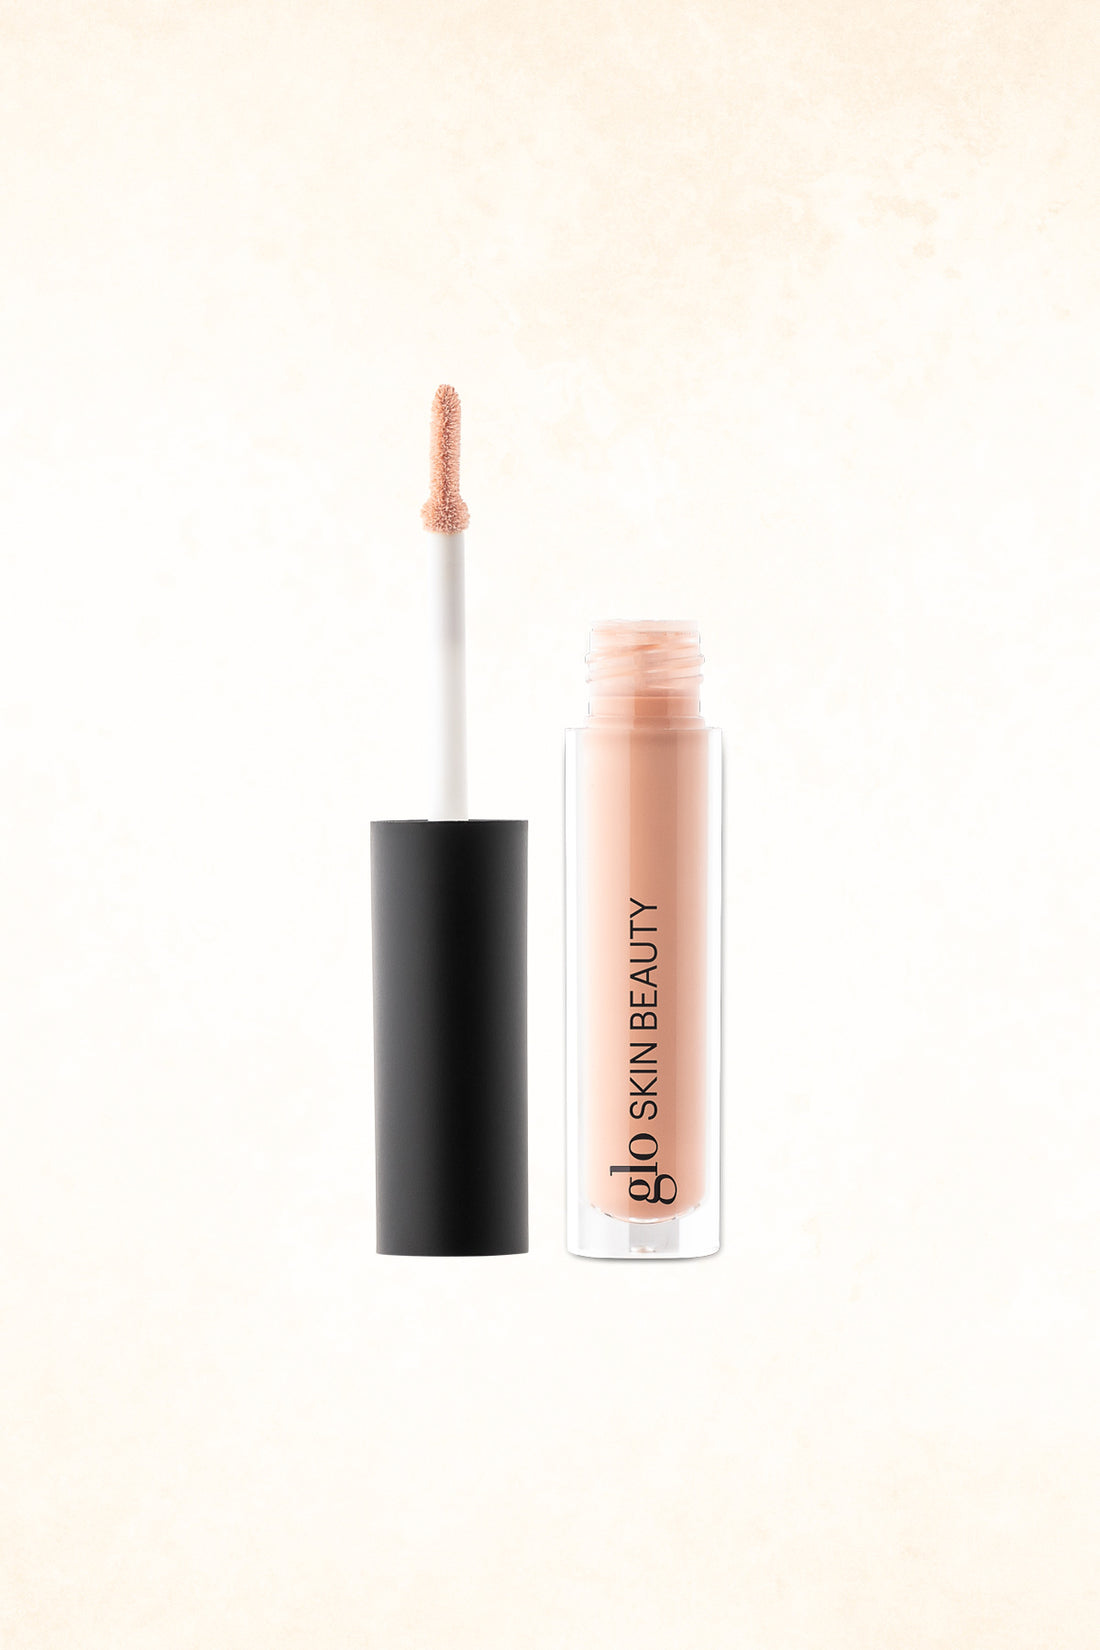 Glo Skin Beauty - Luminous Brightening Concealer - Peach